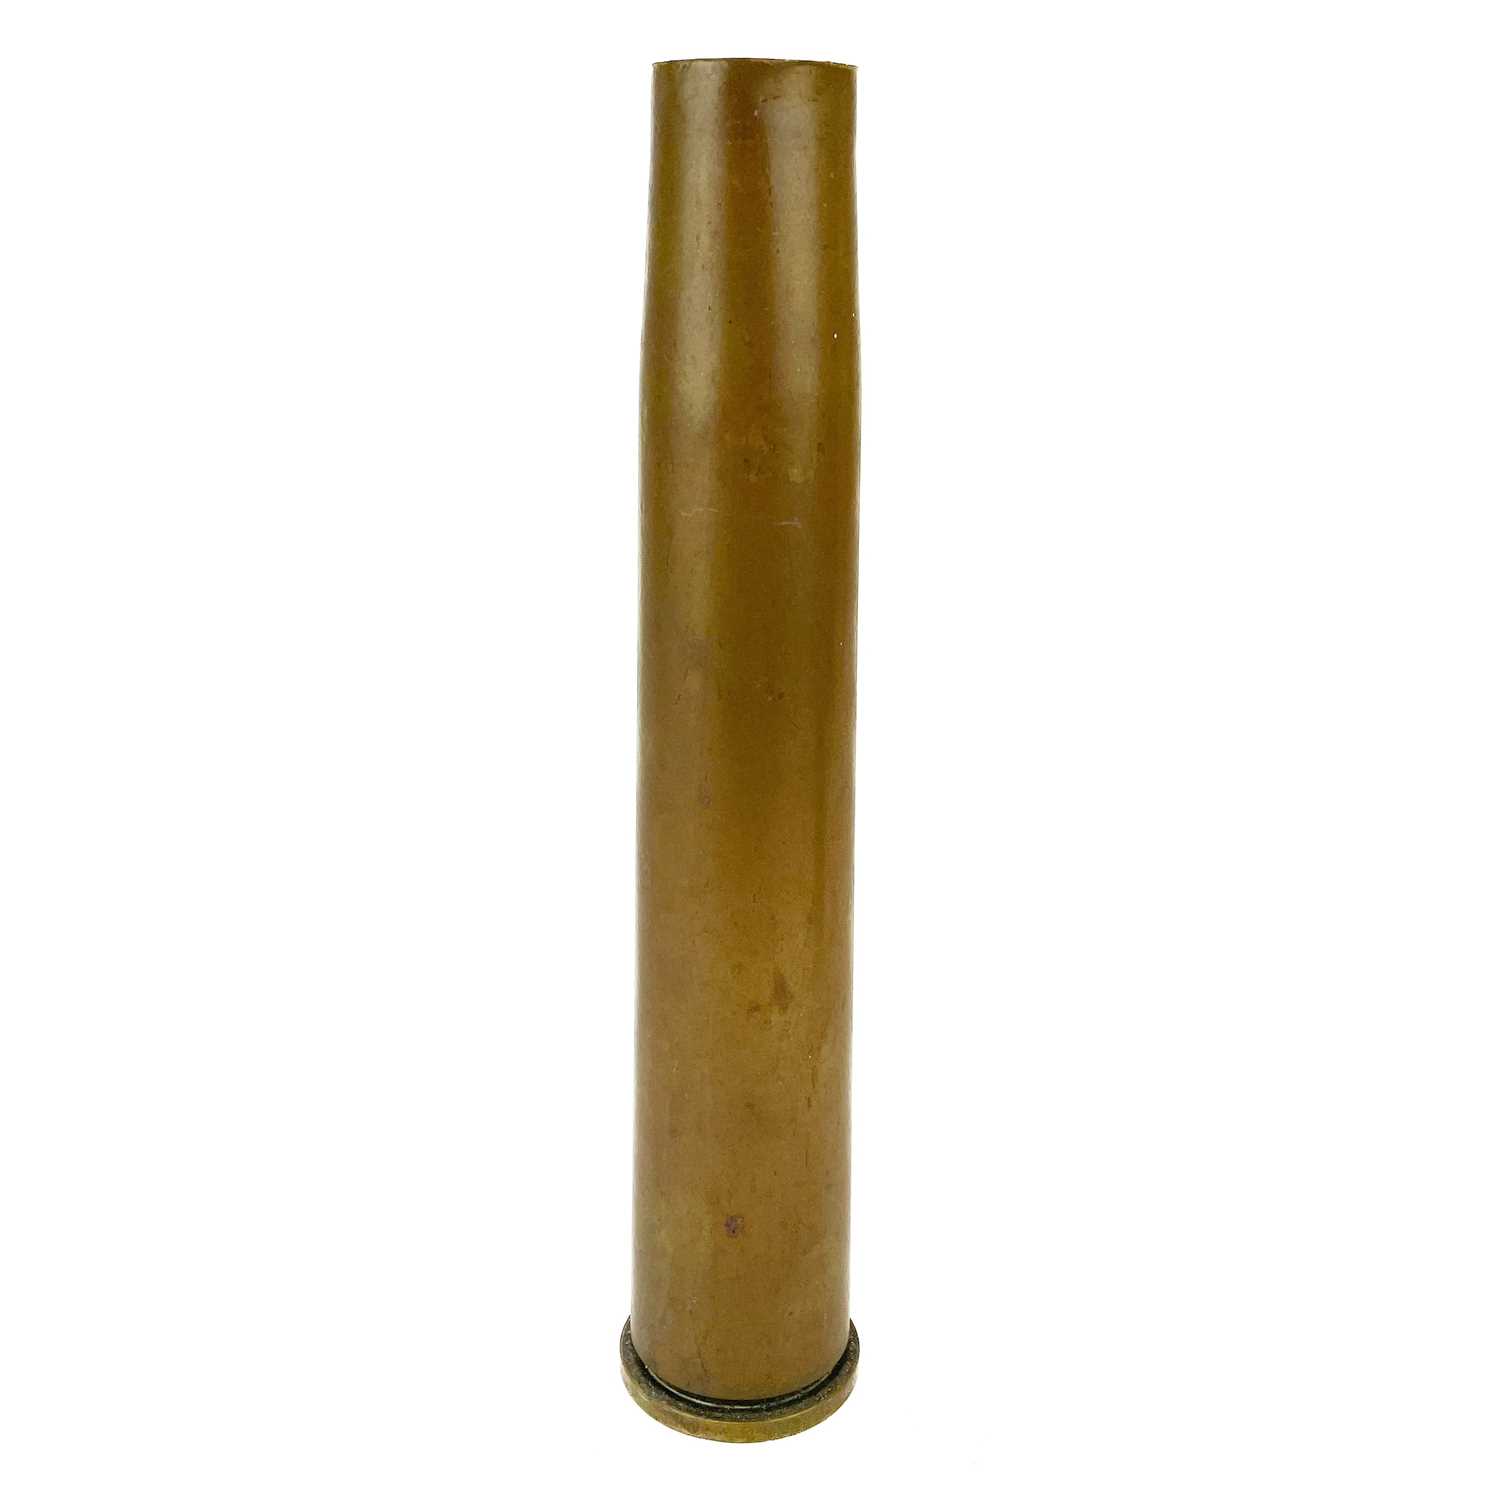 40mm Bofors brass cartridge case